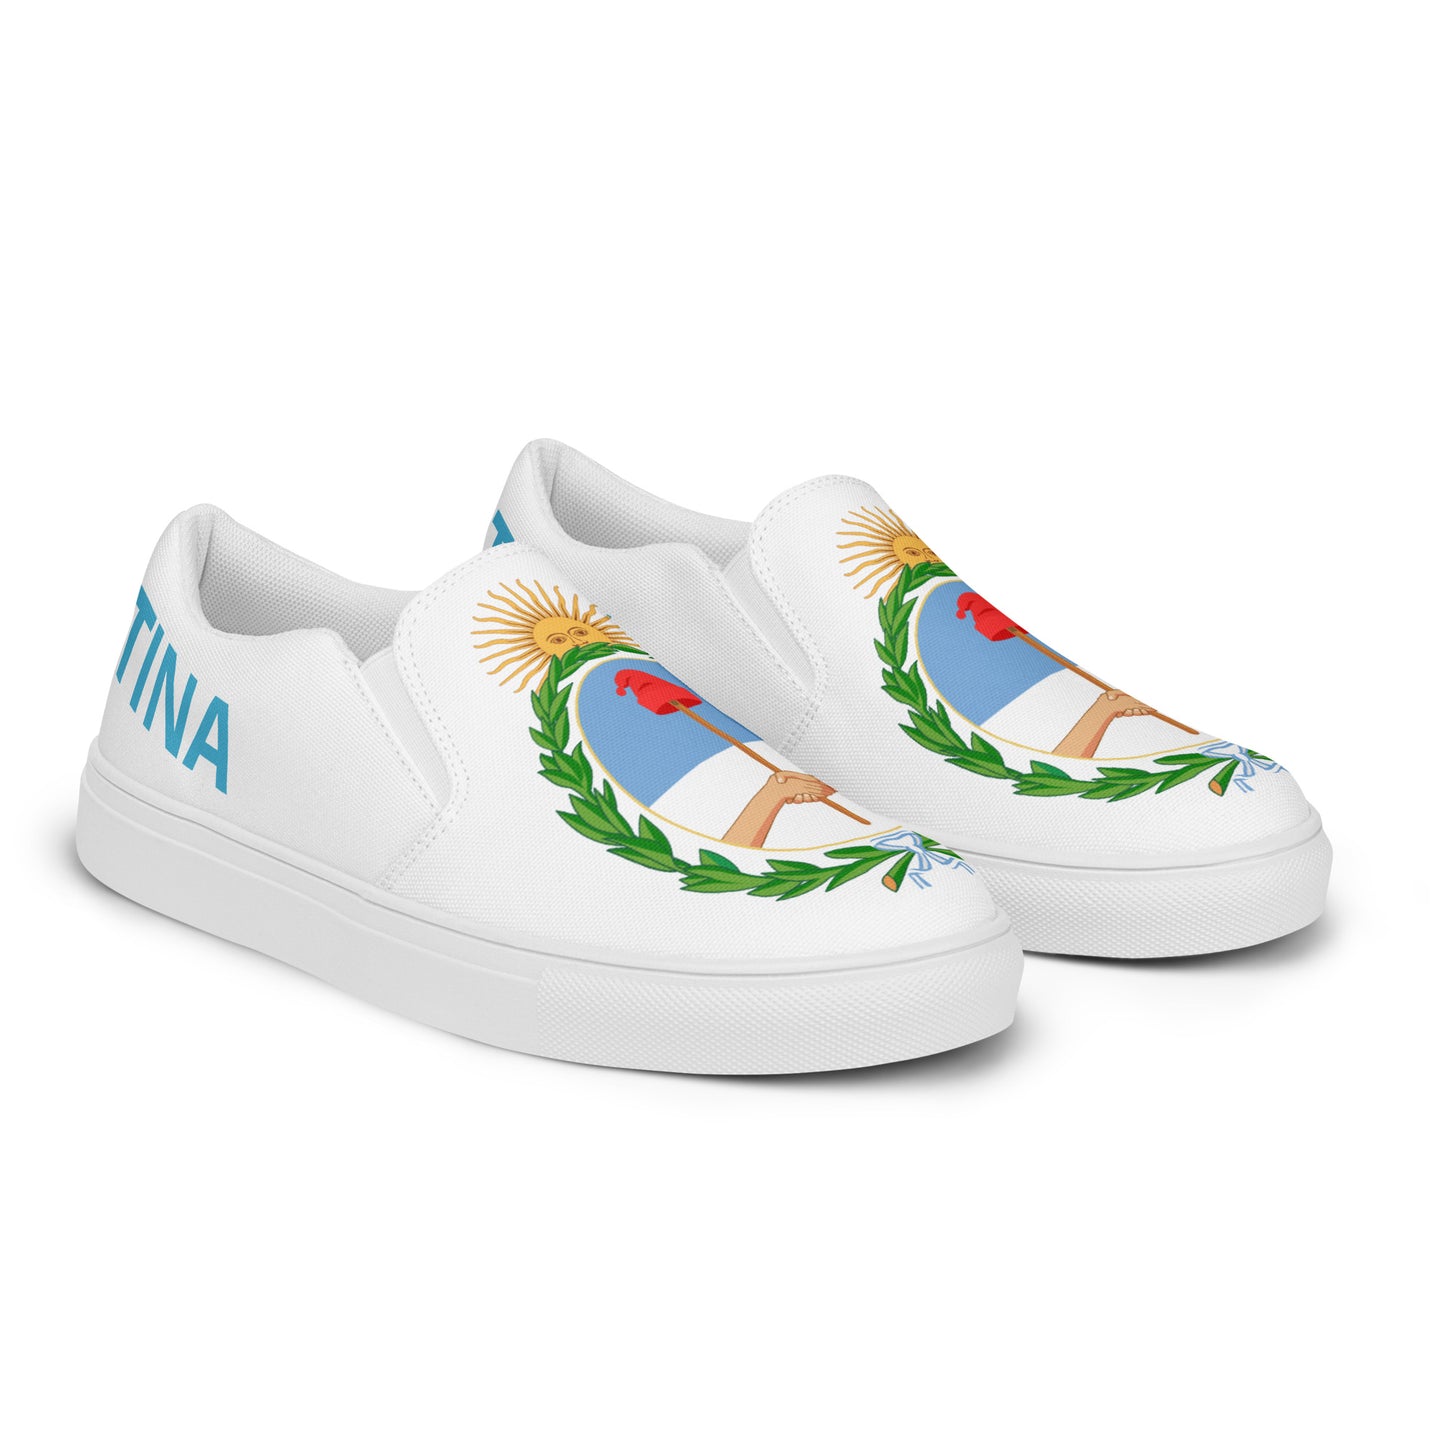 Argentina - Women - White - Slip-on shoes